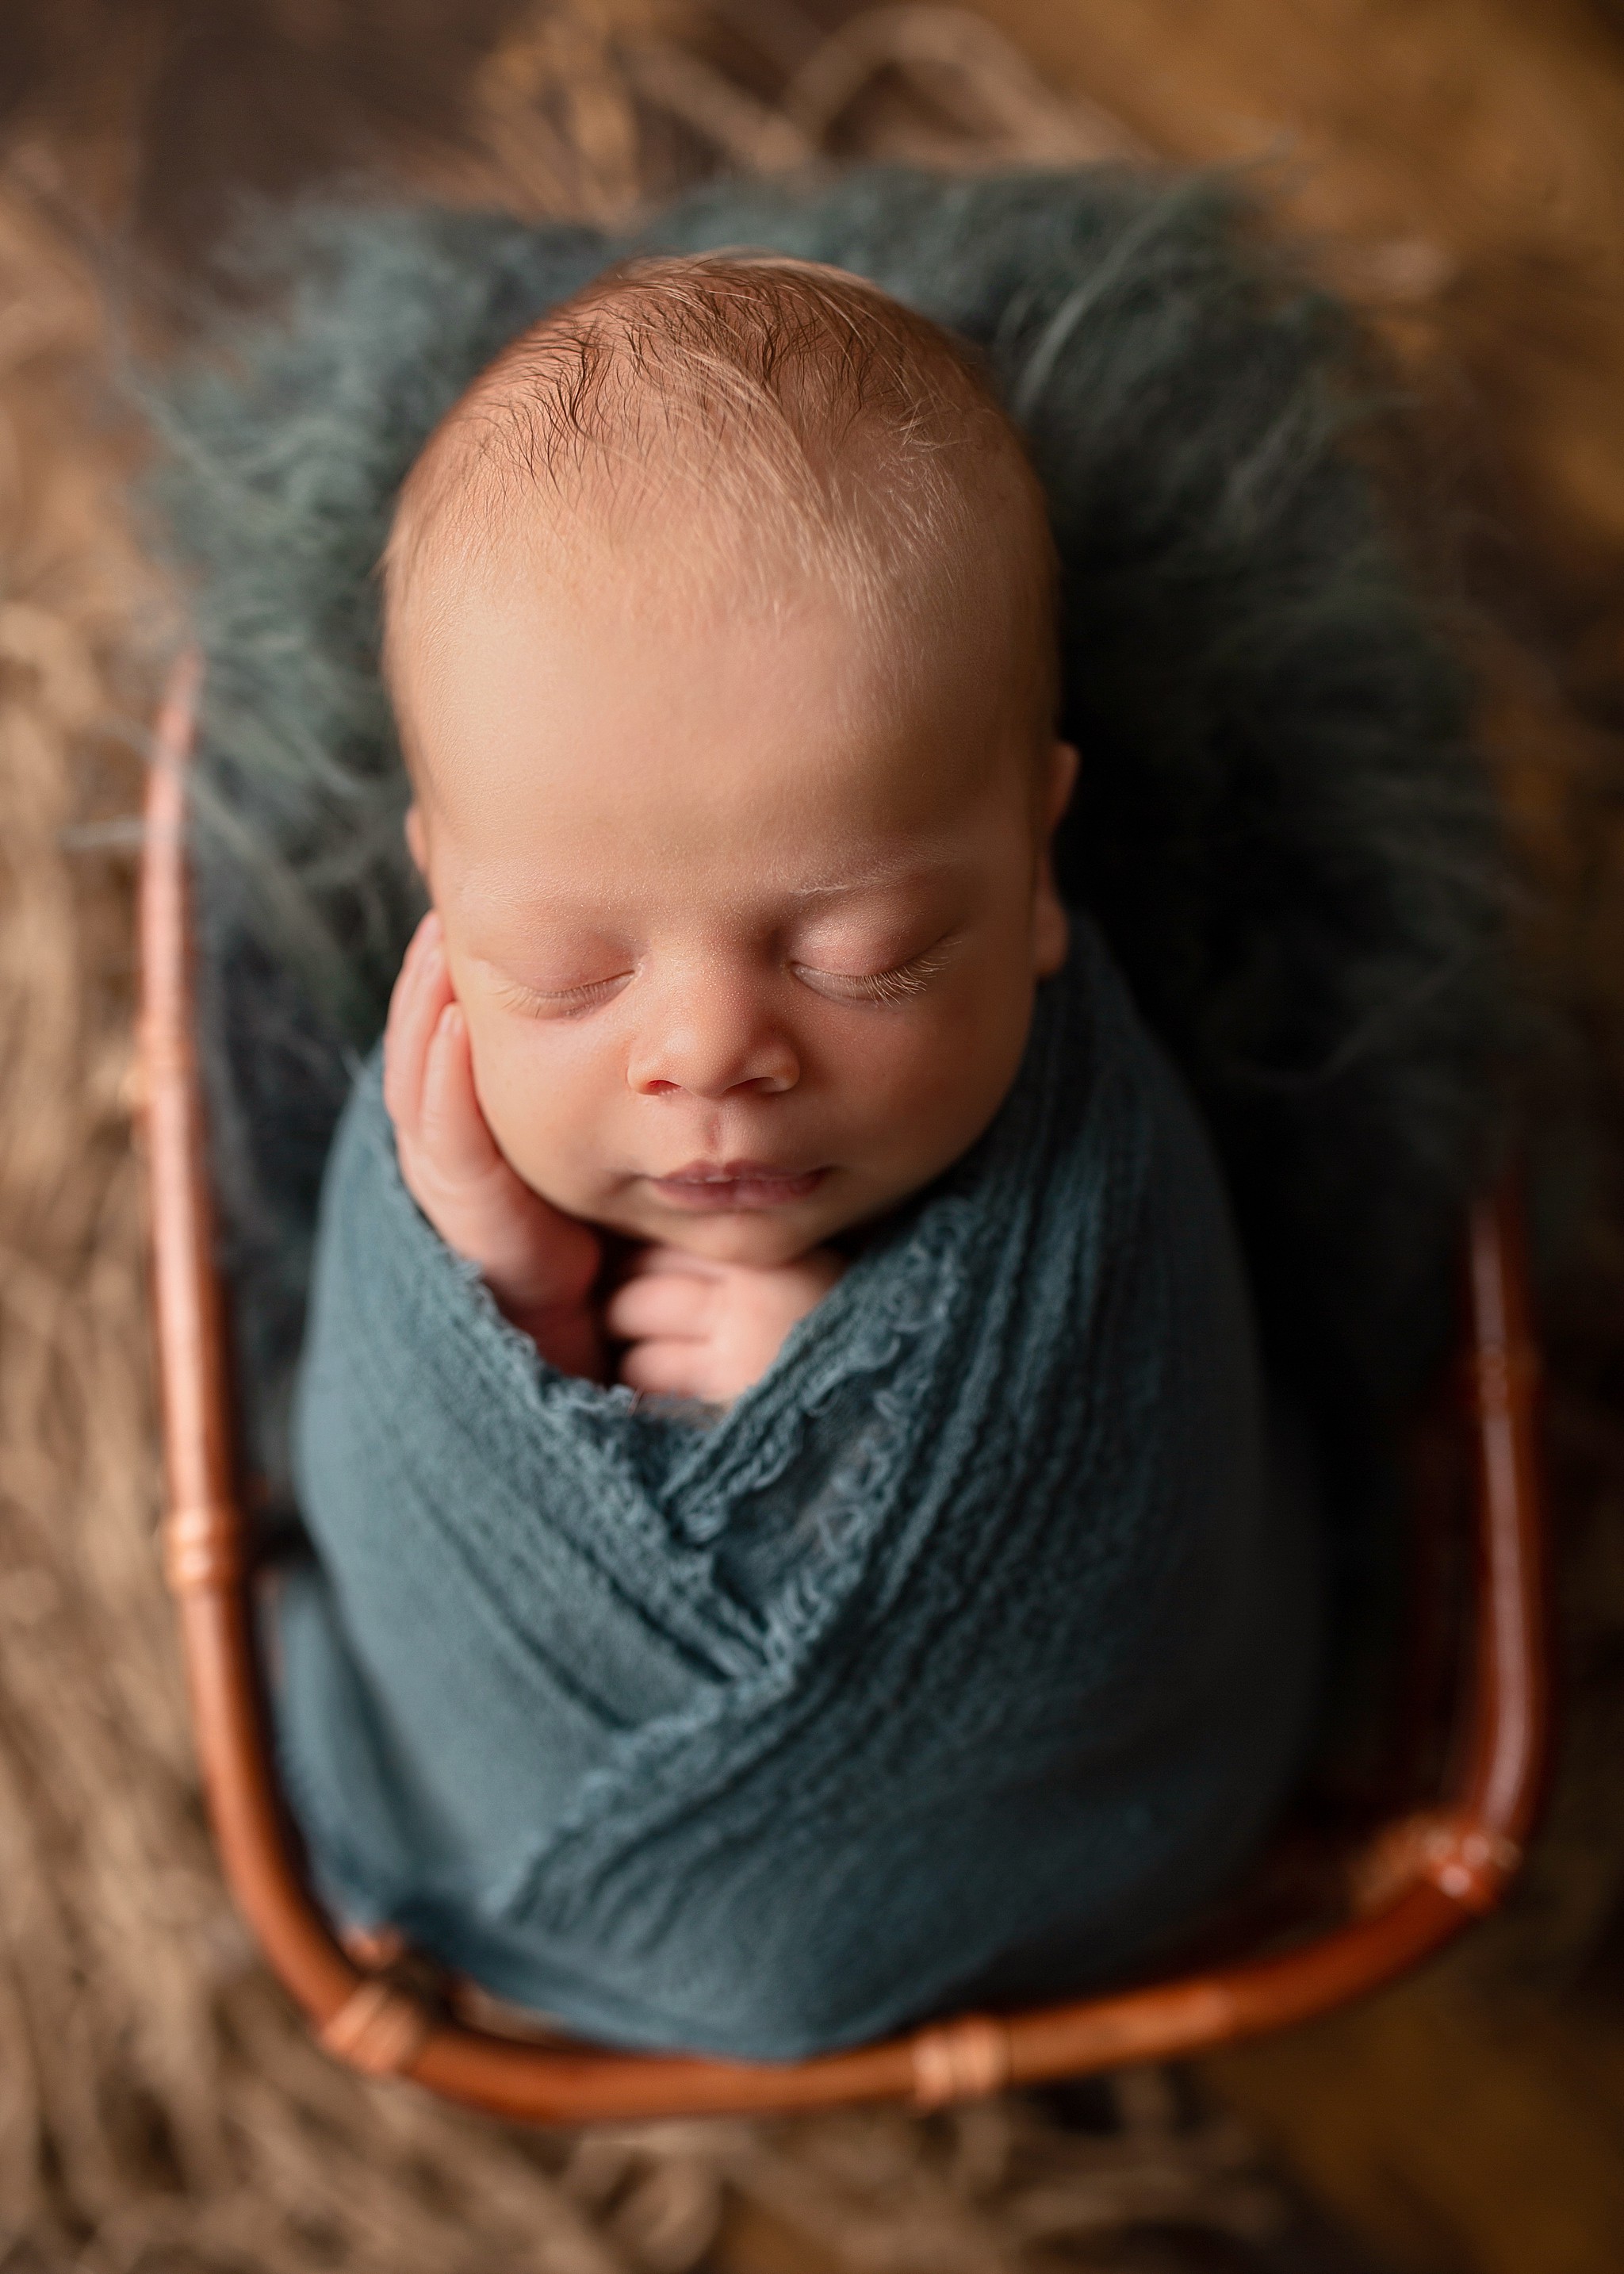 a kamloops newborn photographer captures a sleeping newborn boy in a basket in a teal coloured wrap.